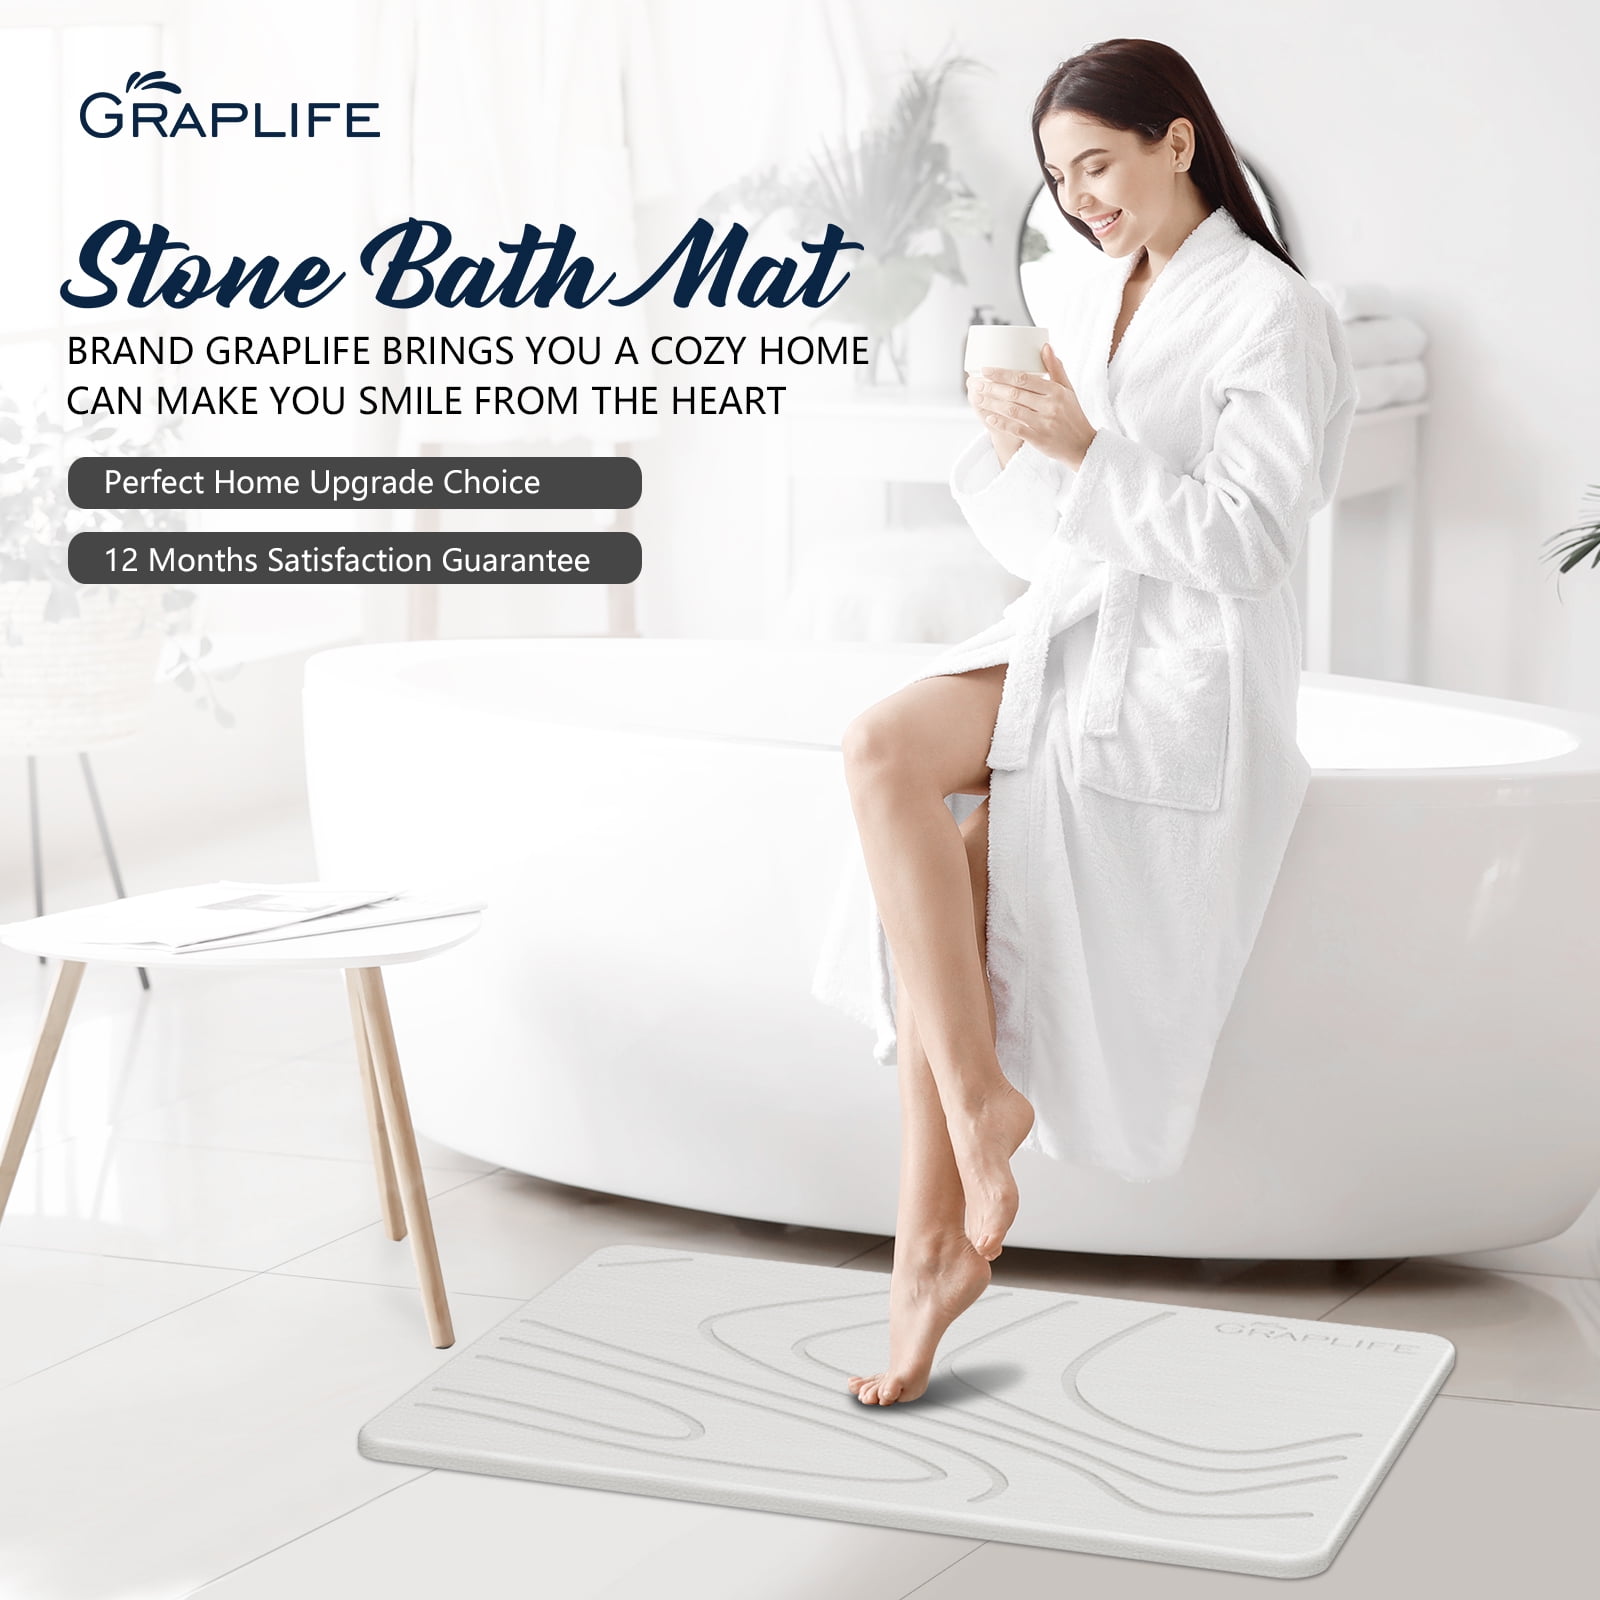 Graplife - Stone Bath Mat, Diatomaceous Earth Shower Mat, Non-Slip Super